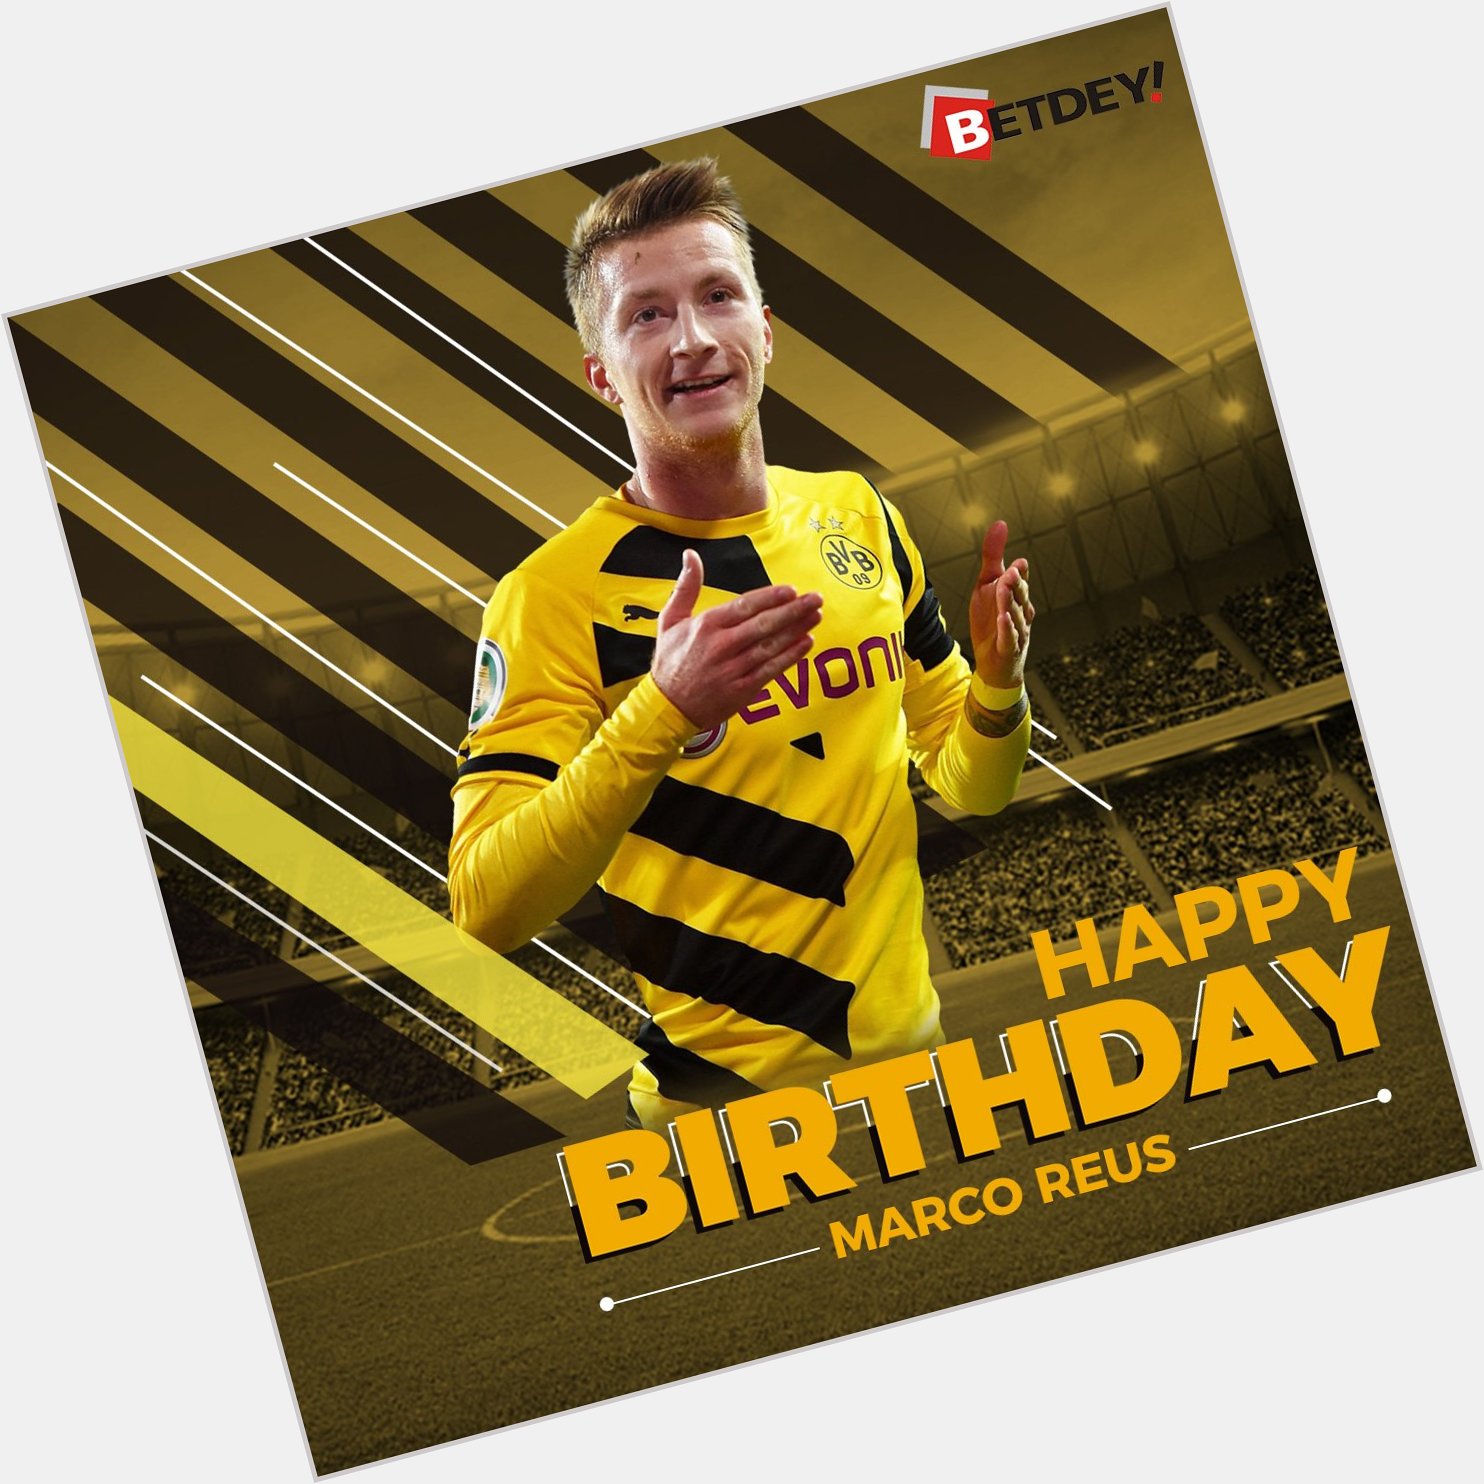 Happy 28th birthday to Marco Reus, Wishing you speedy recovery 